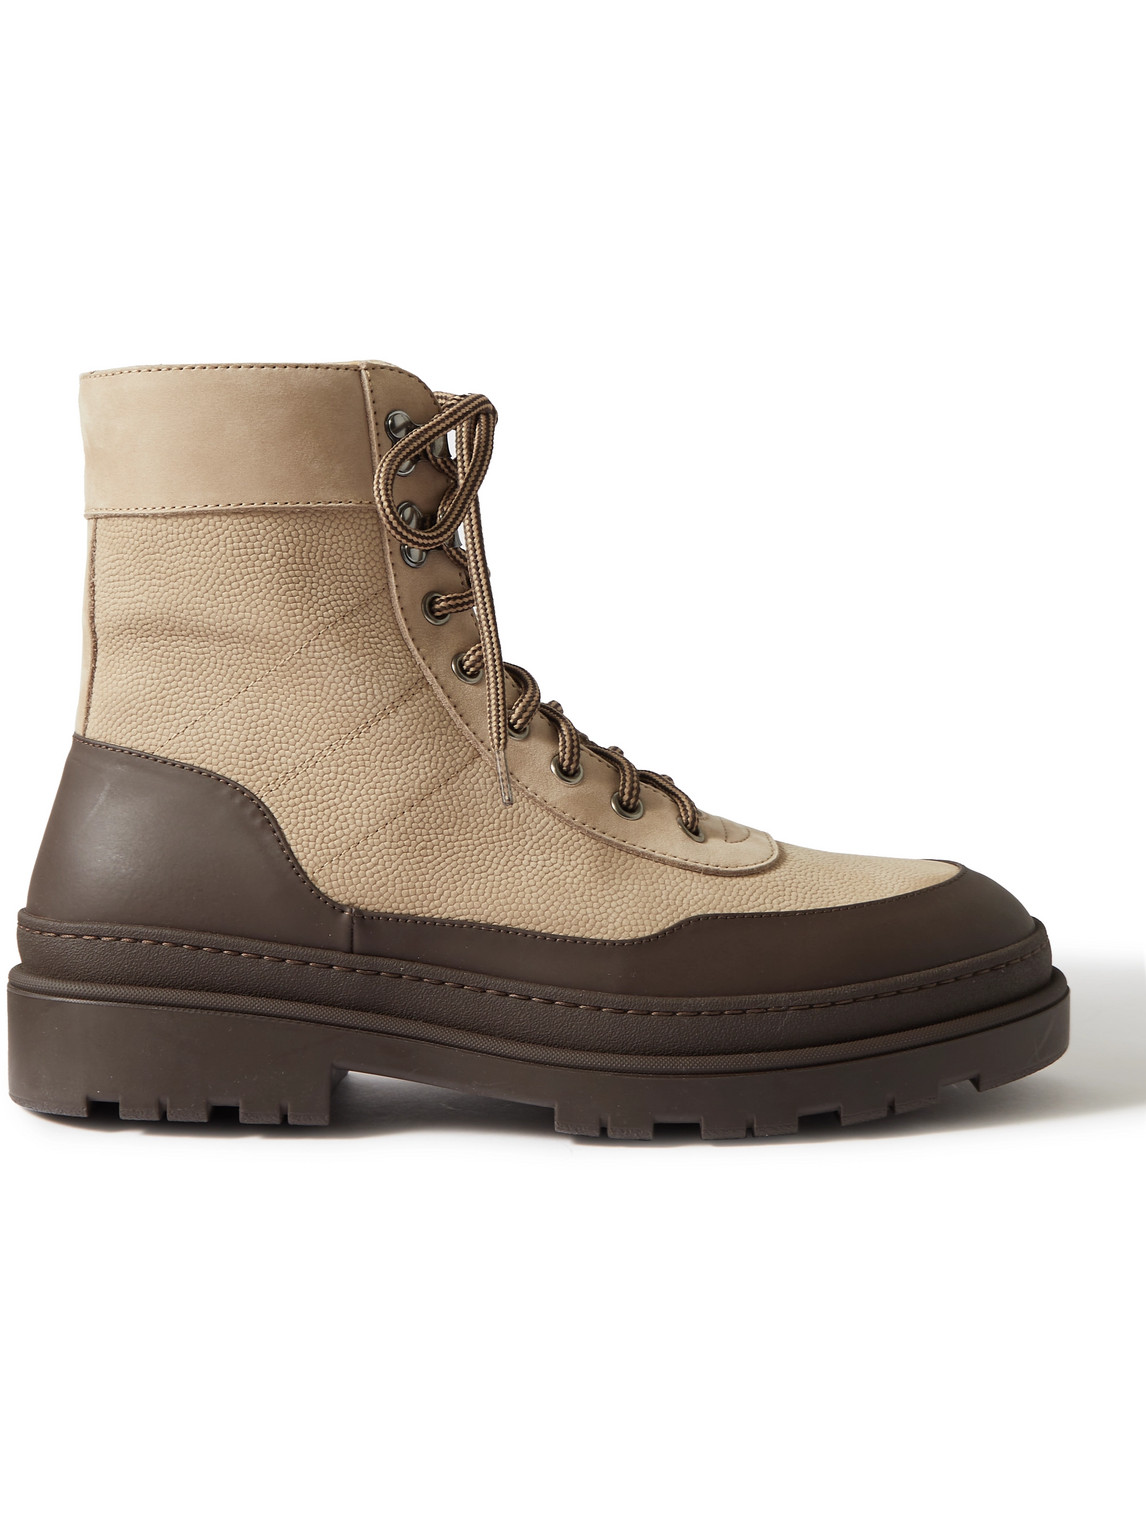 Brunello Cucinelli - Rubber-Trimmed Pebble-Grain Leather Hiking Boots - Men - Brown - EU 43 von Brunello Cucinelli